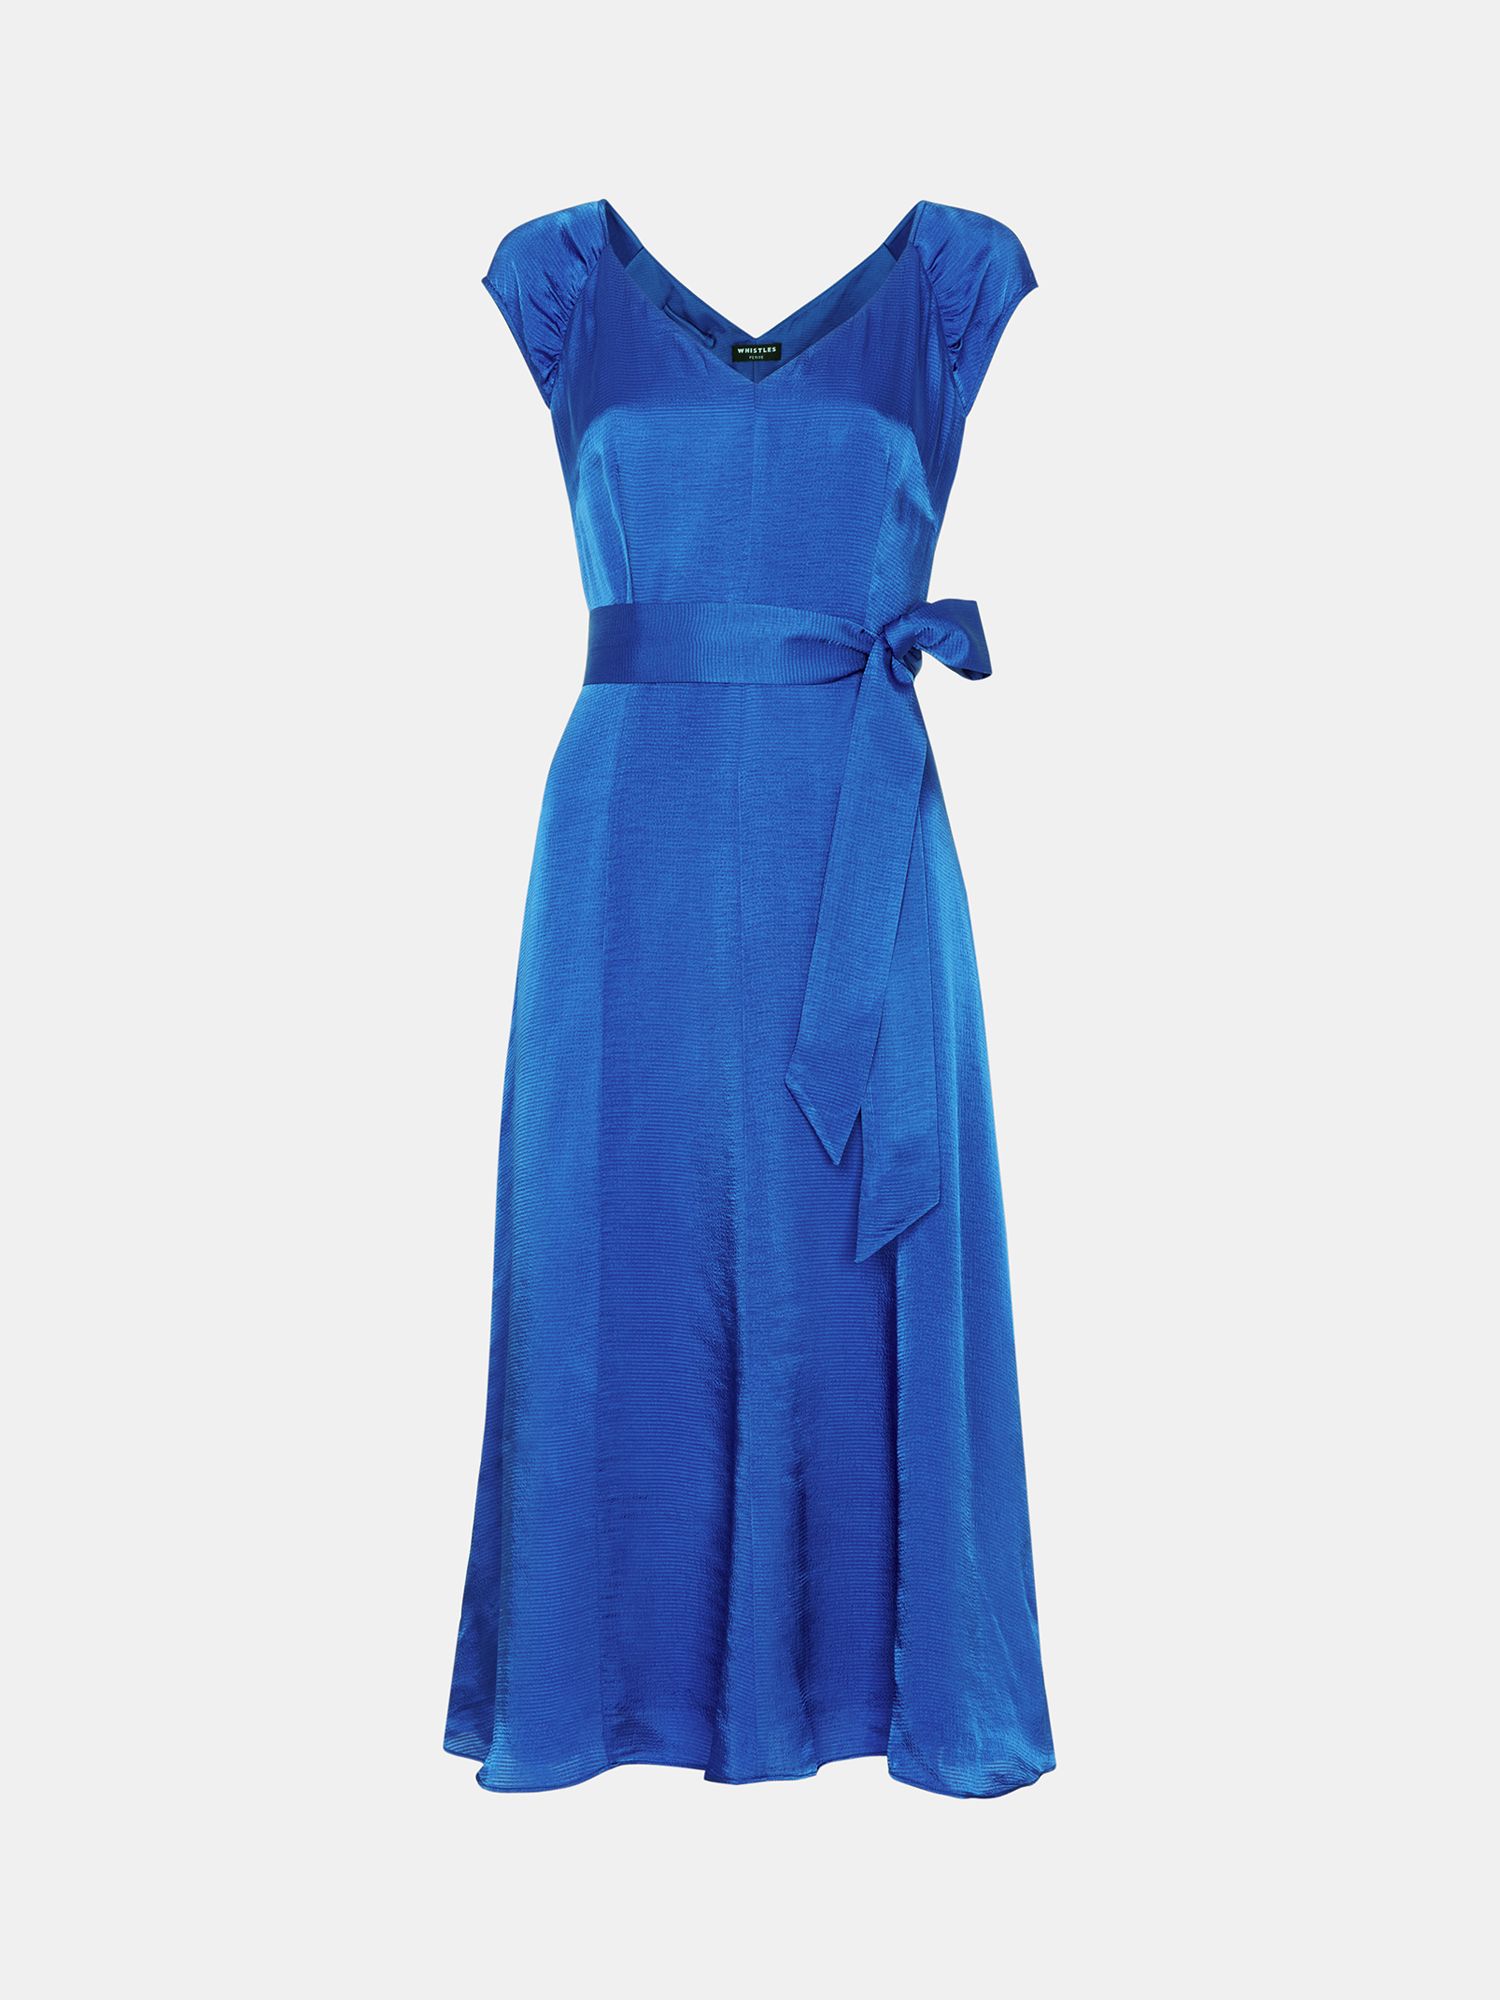 Whistles Petite Arie Hammered Satin Midi Dress, Cobalt Blue, 6